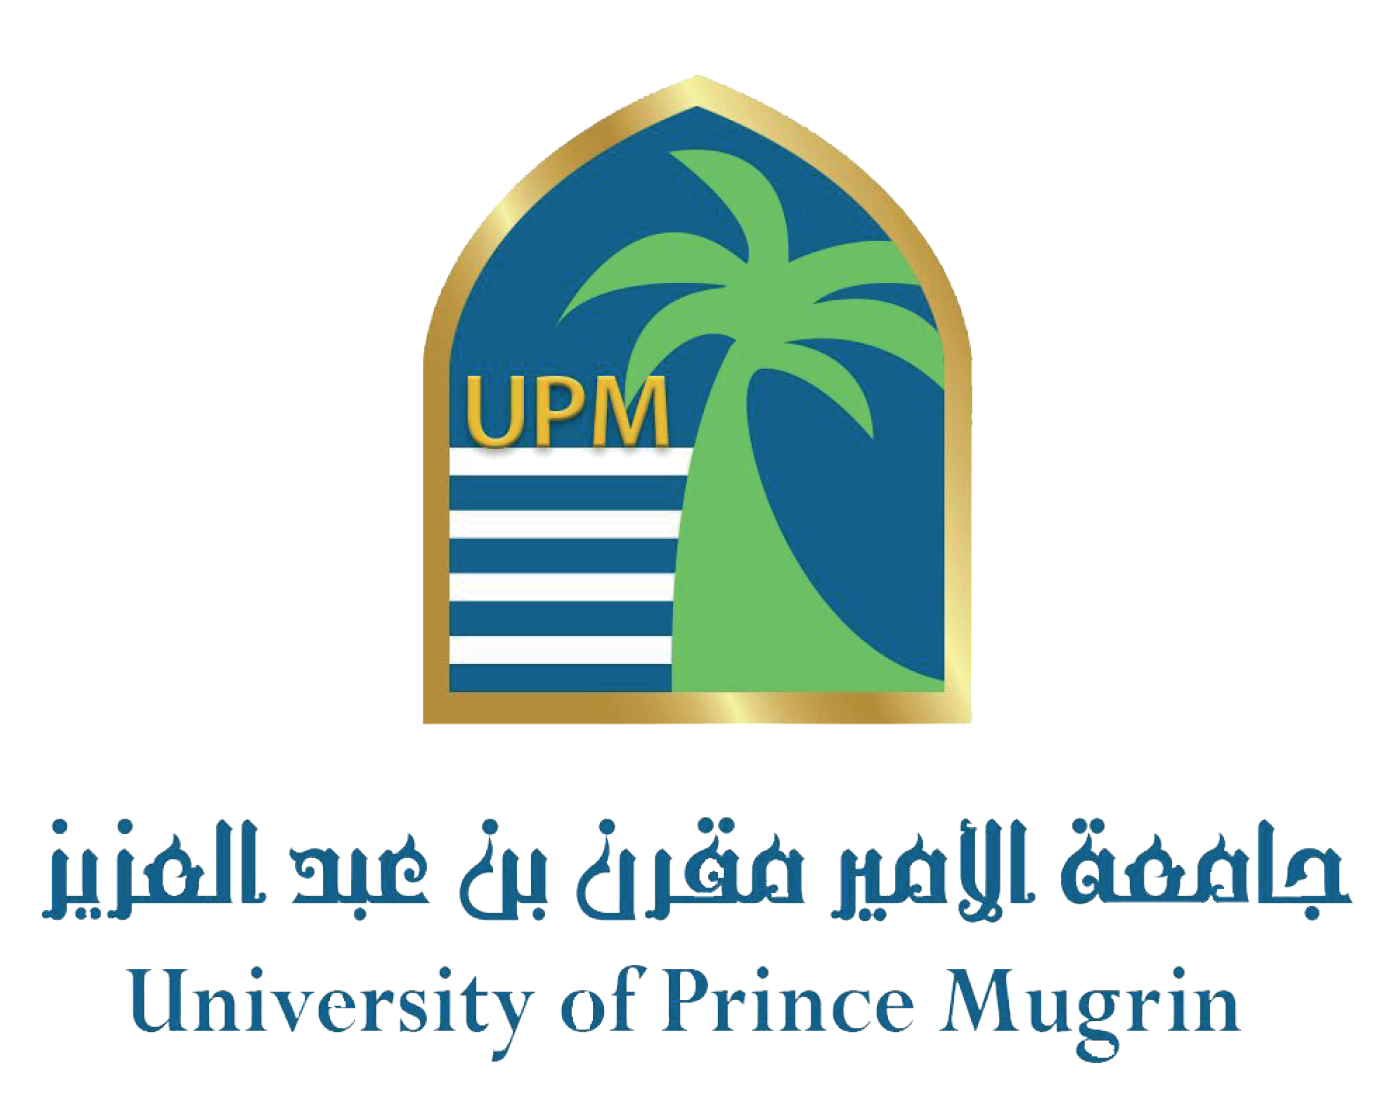 University of Prince Mugrin